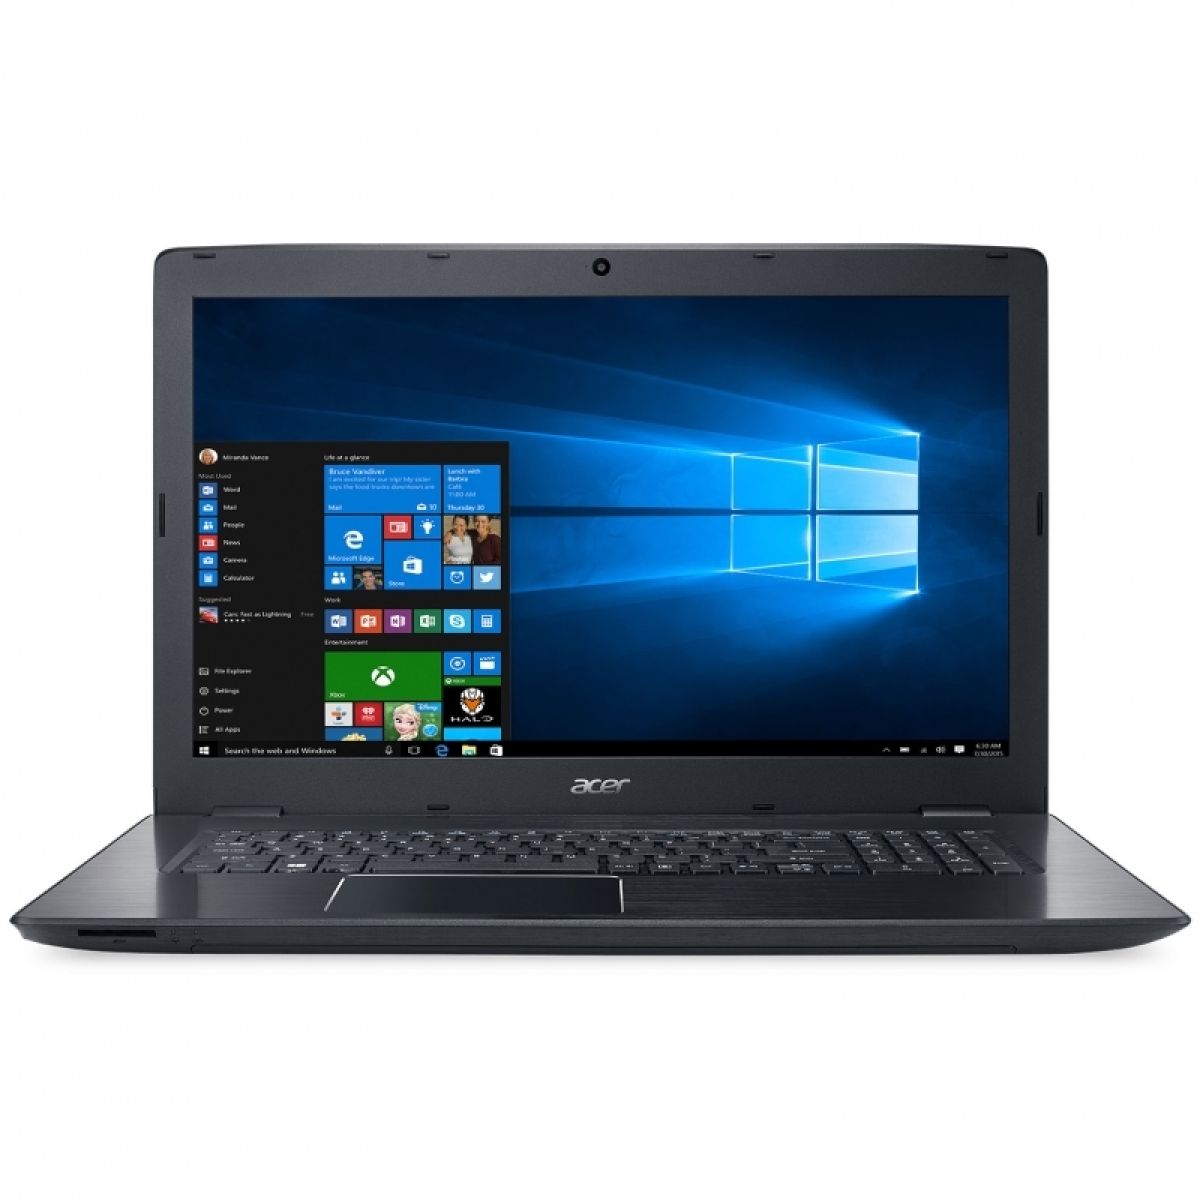 Acer Aspire E 17 AMD Quad-Core A4-7210 2,2Ghz 4 Go HDD 1 To